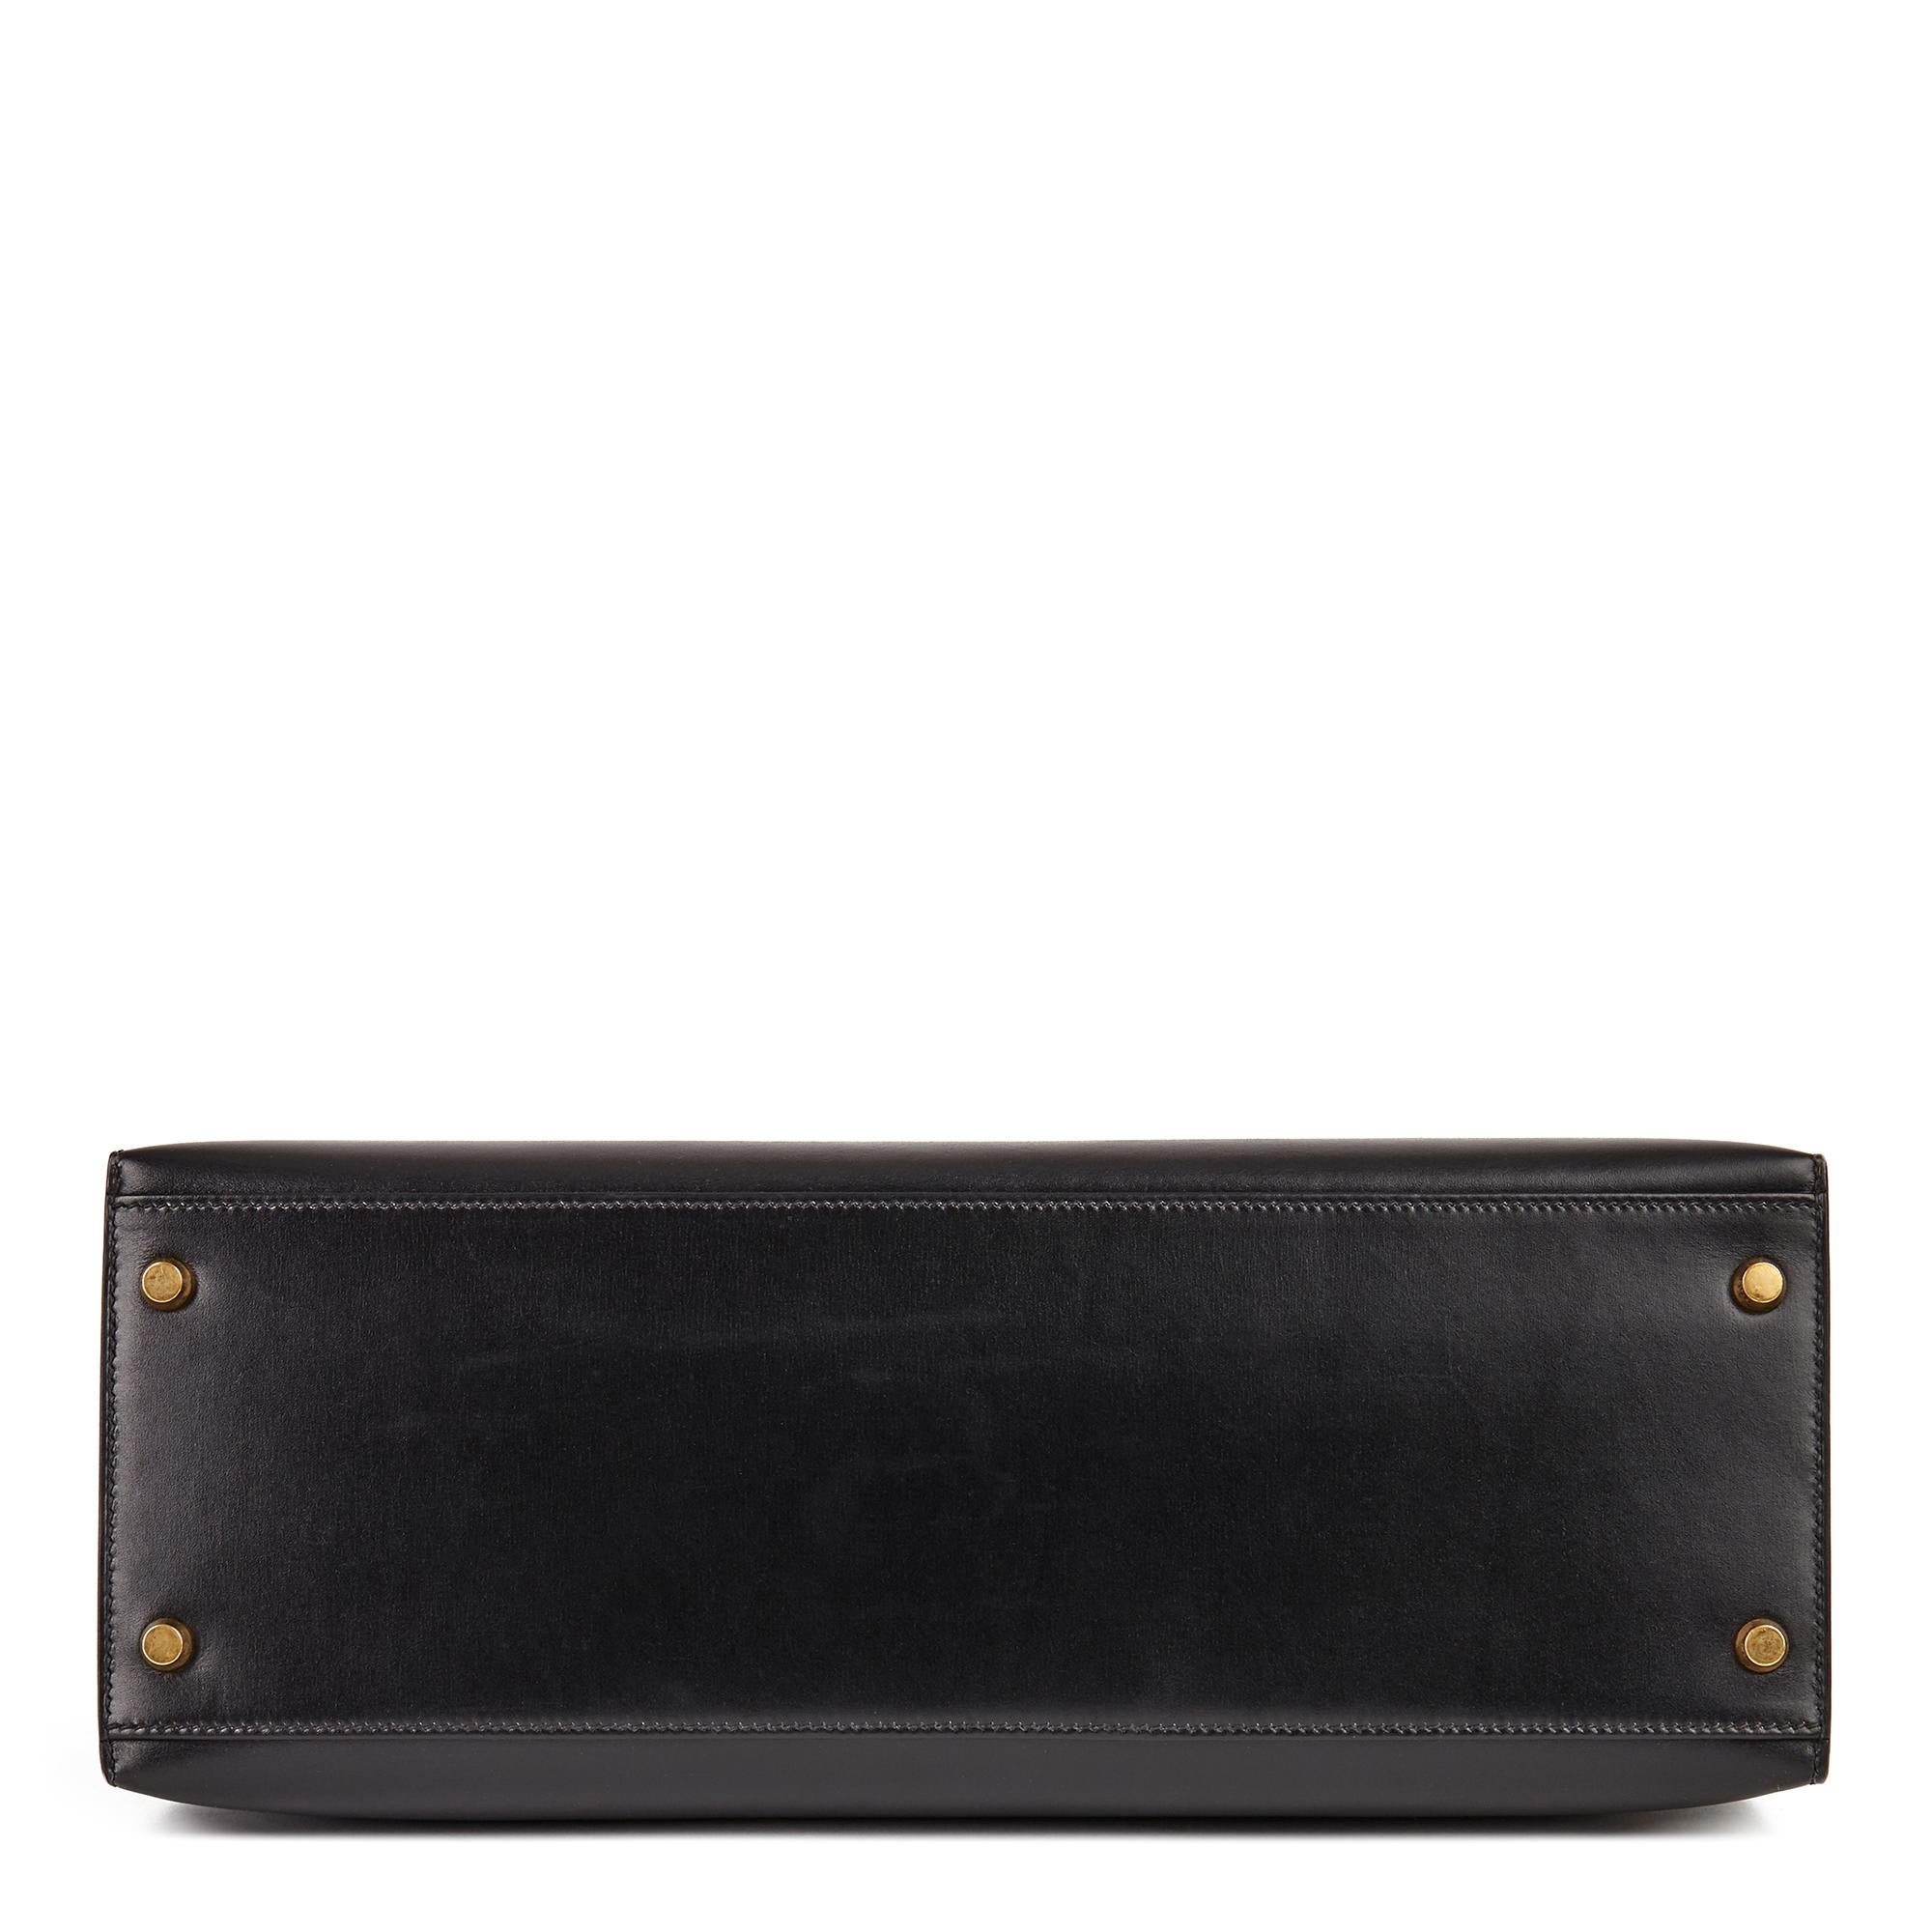 2000 Hermès Black Box Calf Leather Vintage Kelly 35cm Sellier 2